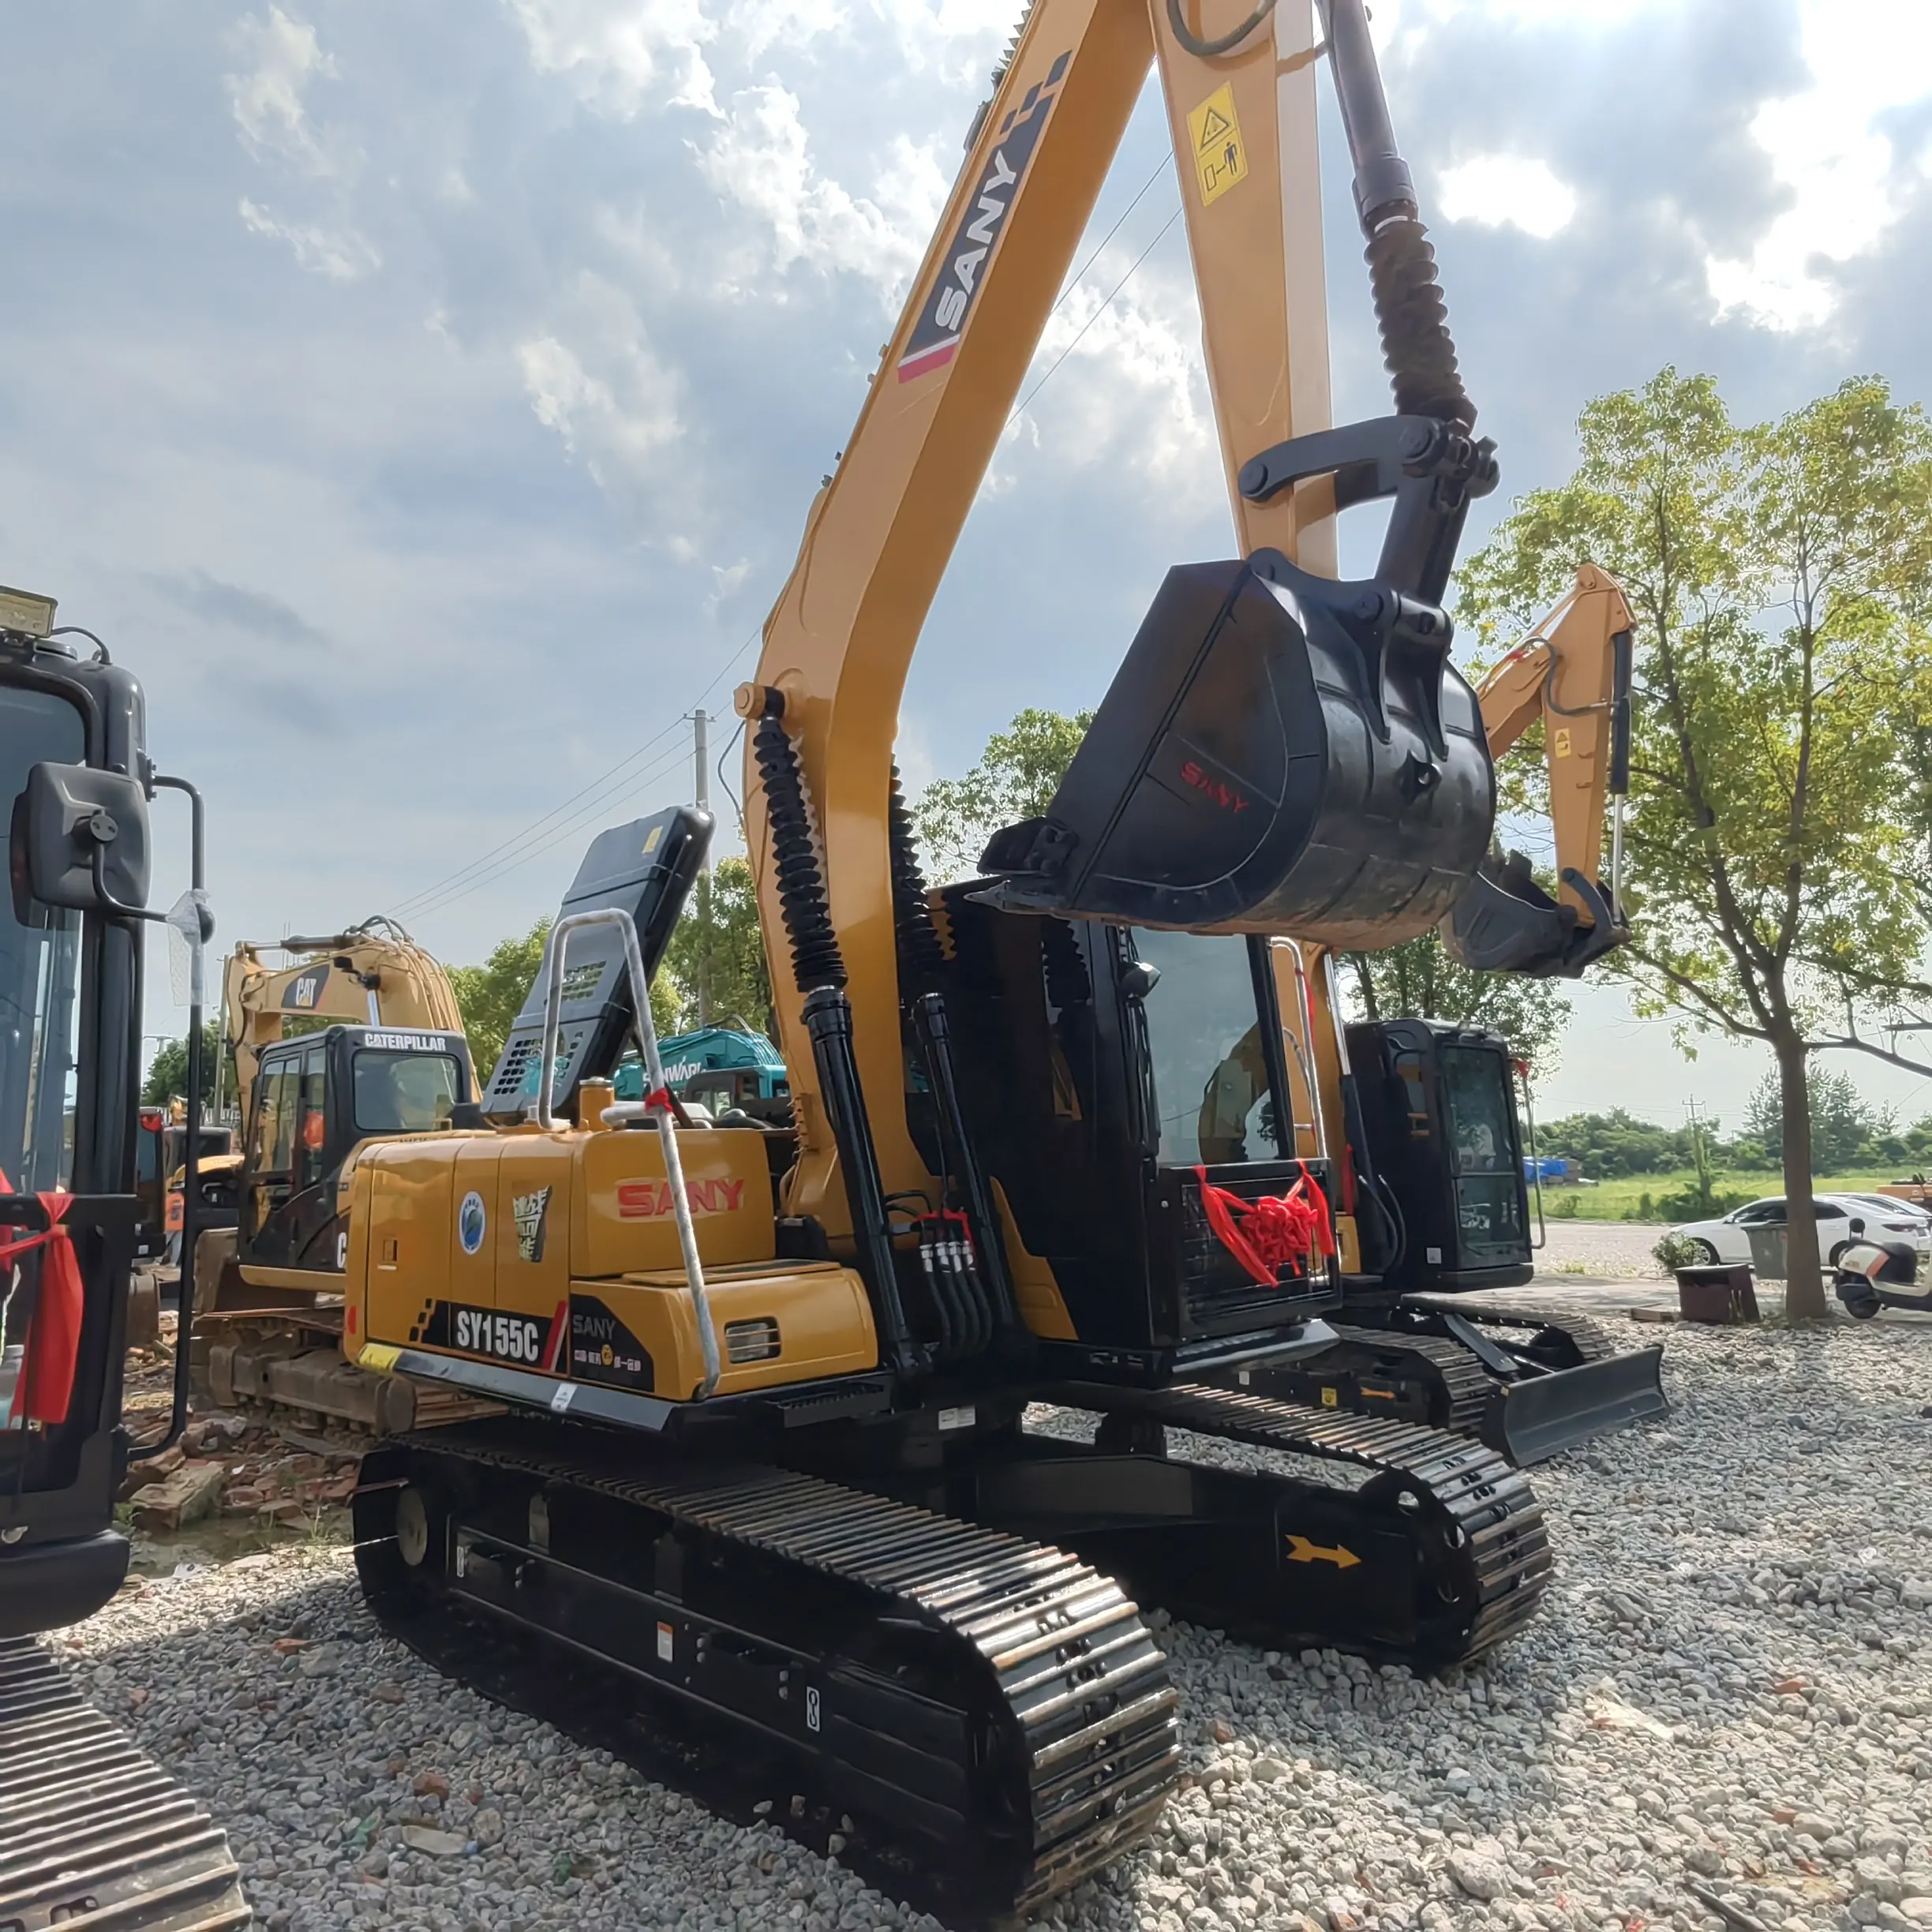 Macchine edili usate cingolate In Cina fatte SY155 escavatore a Shanghai